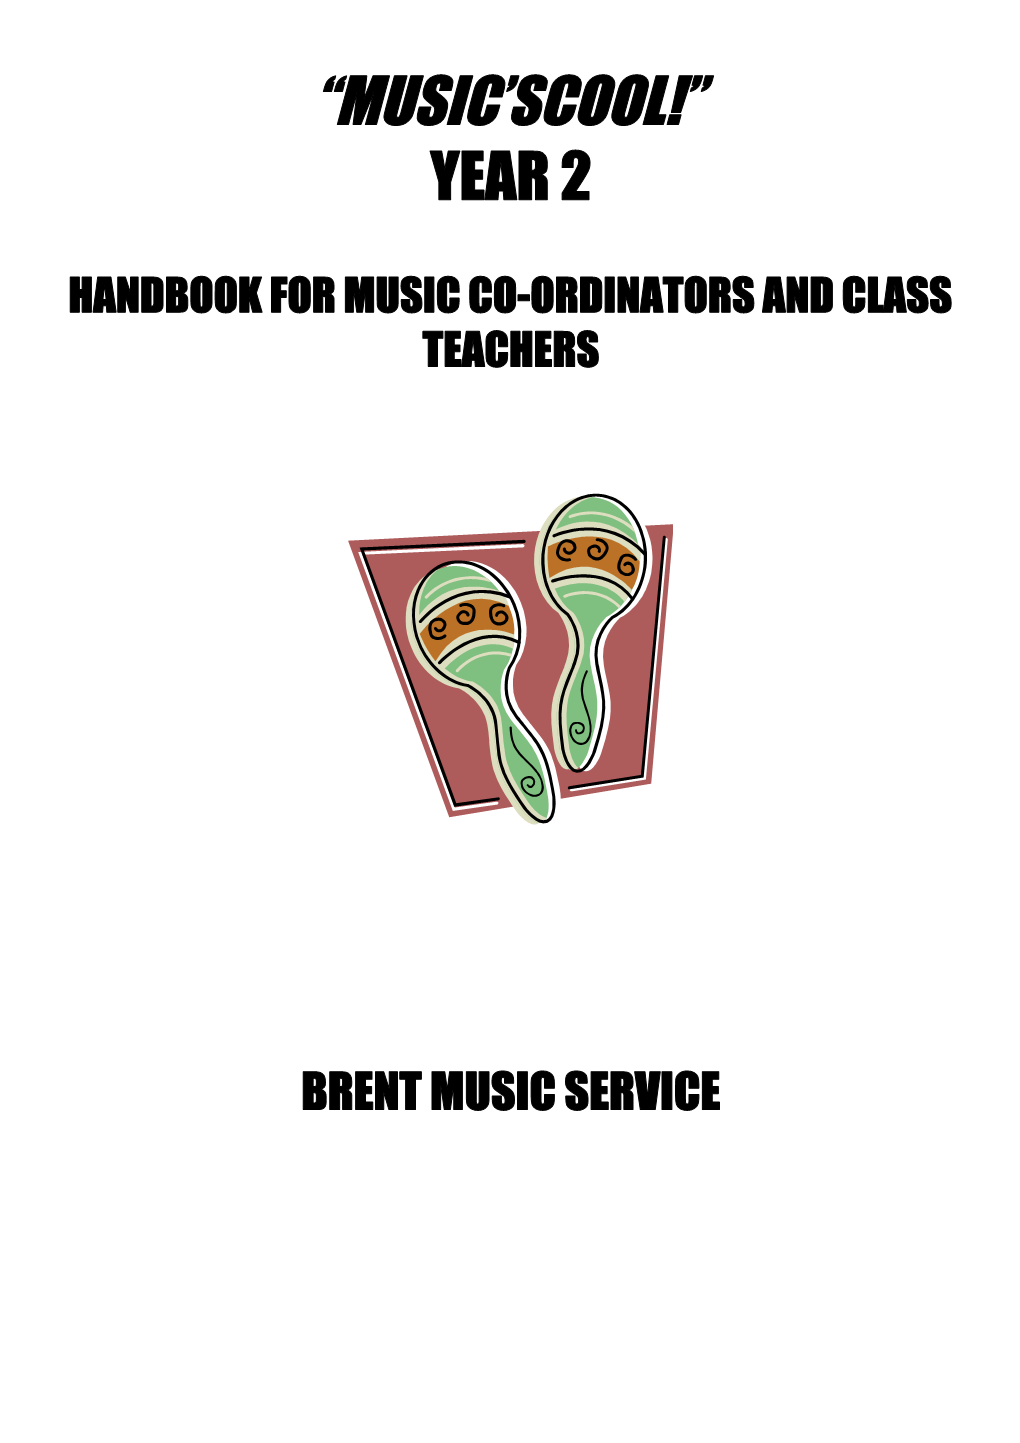 Handbook for Music Co-Ordinators and Class Teachers